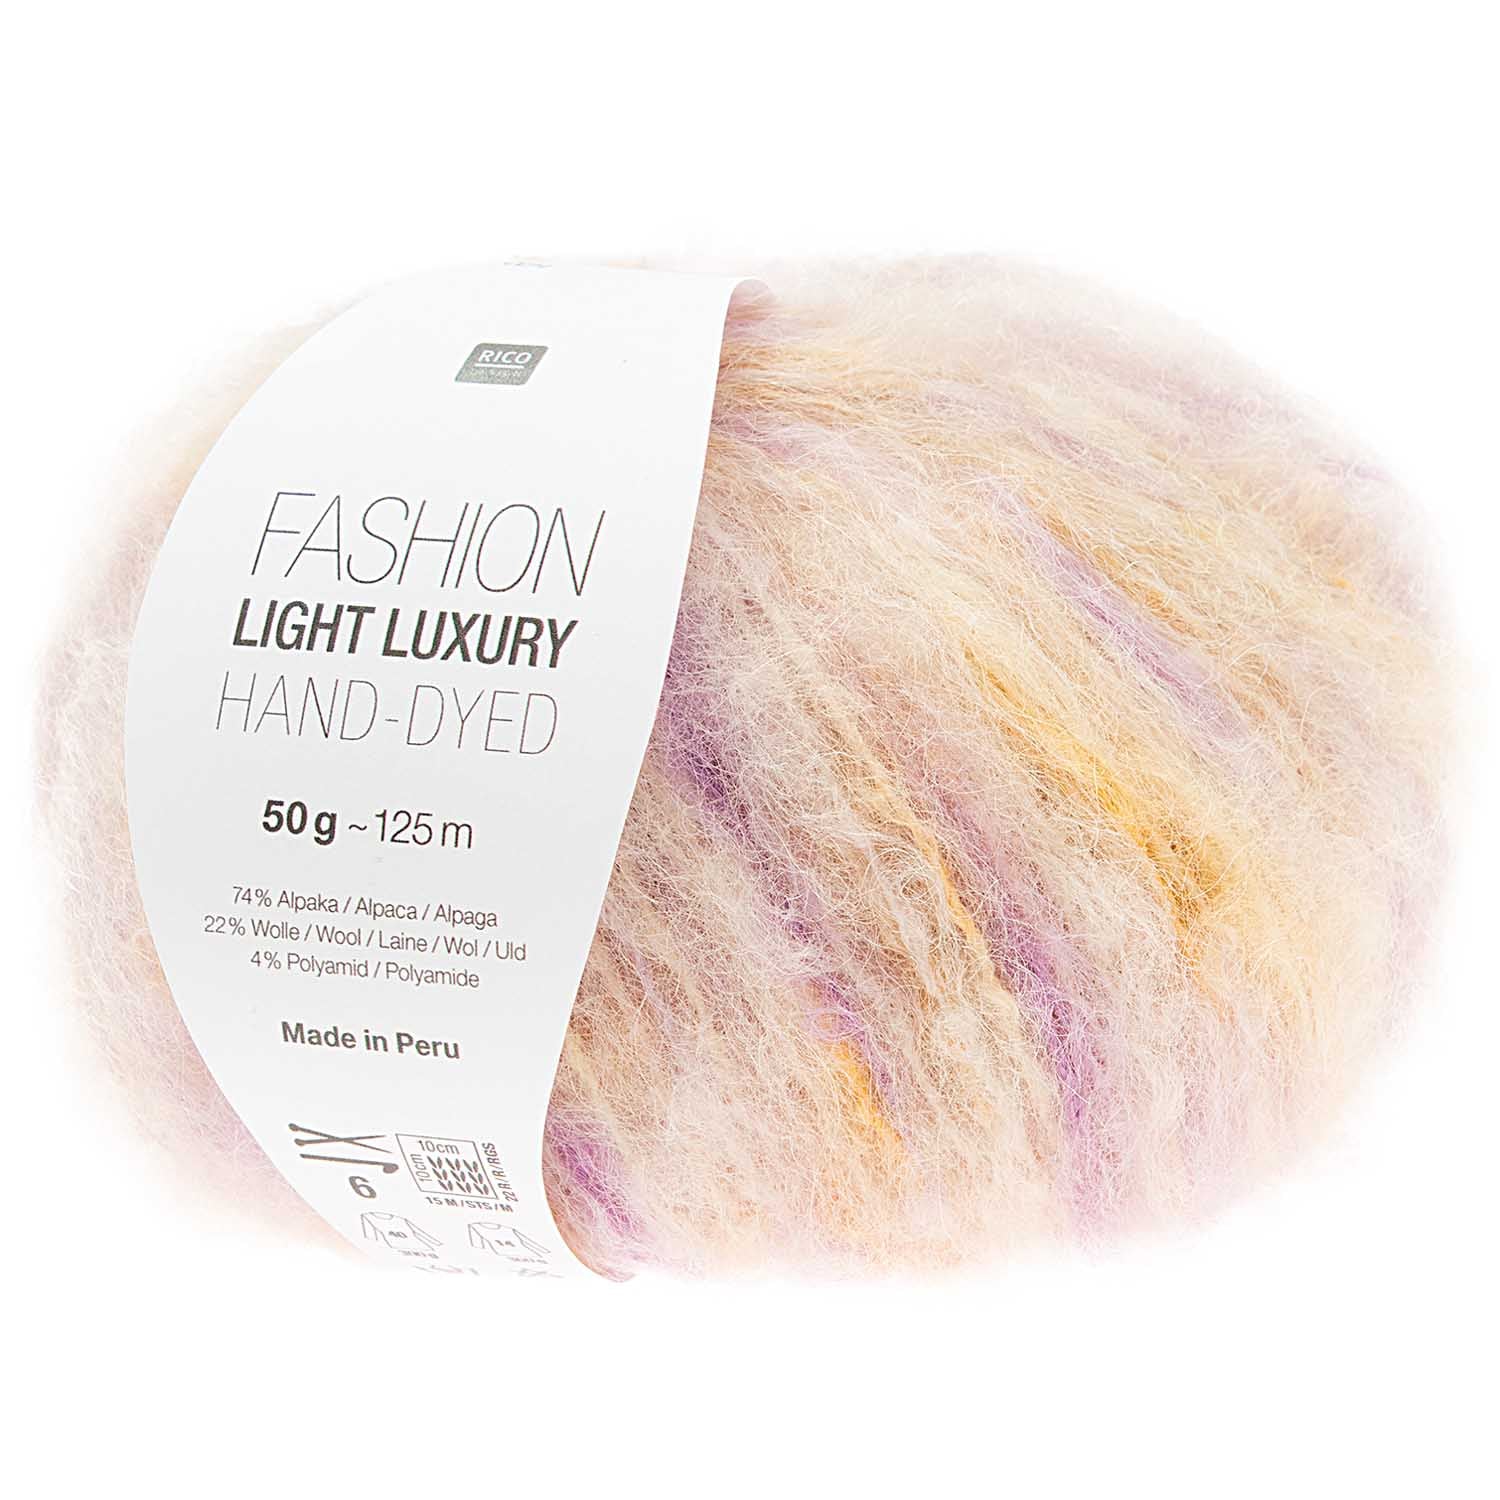 rico fashion light luxury hand-dyed - 004 pastell